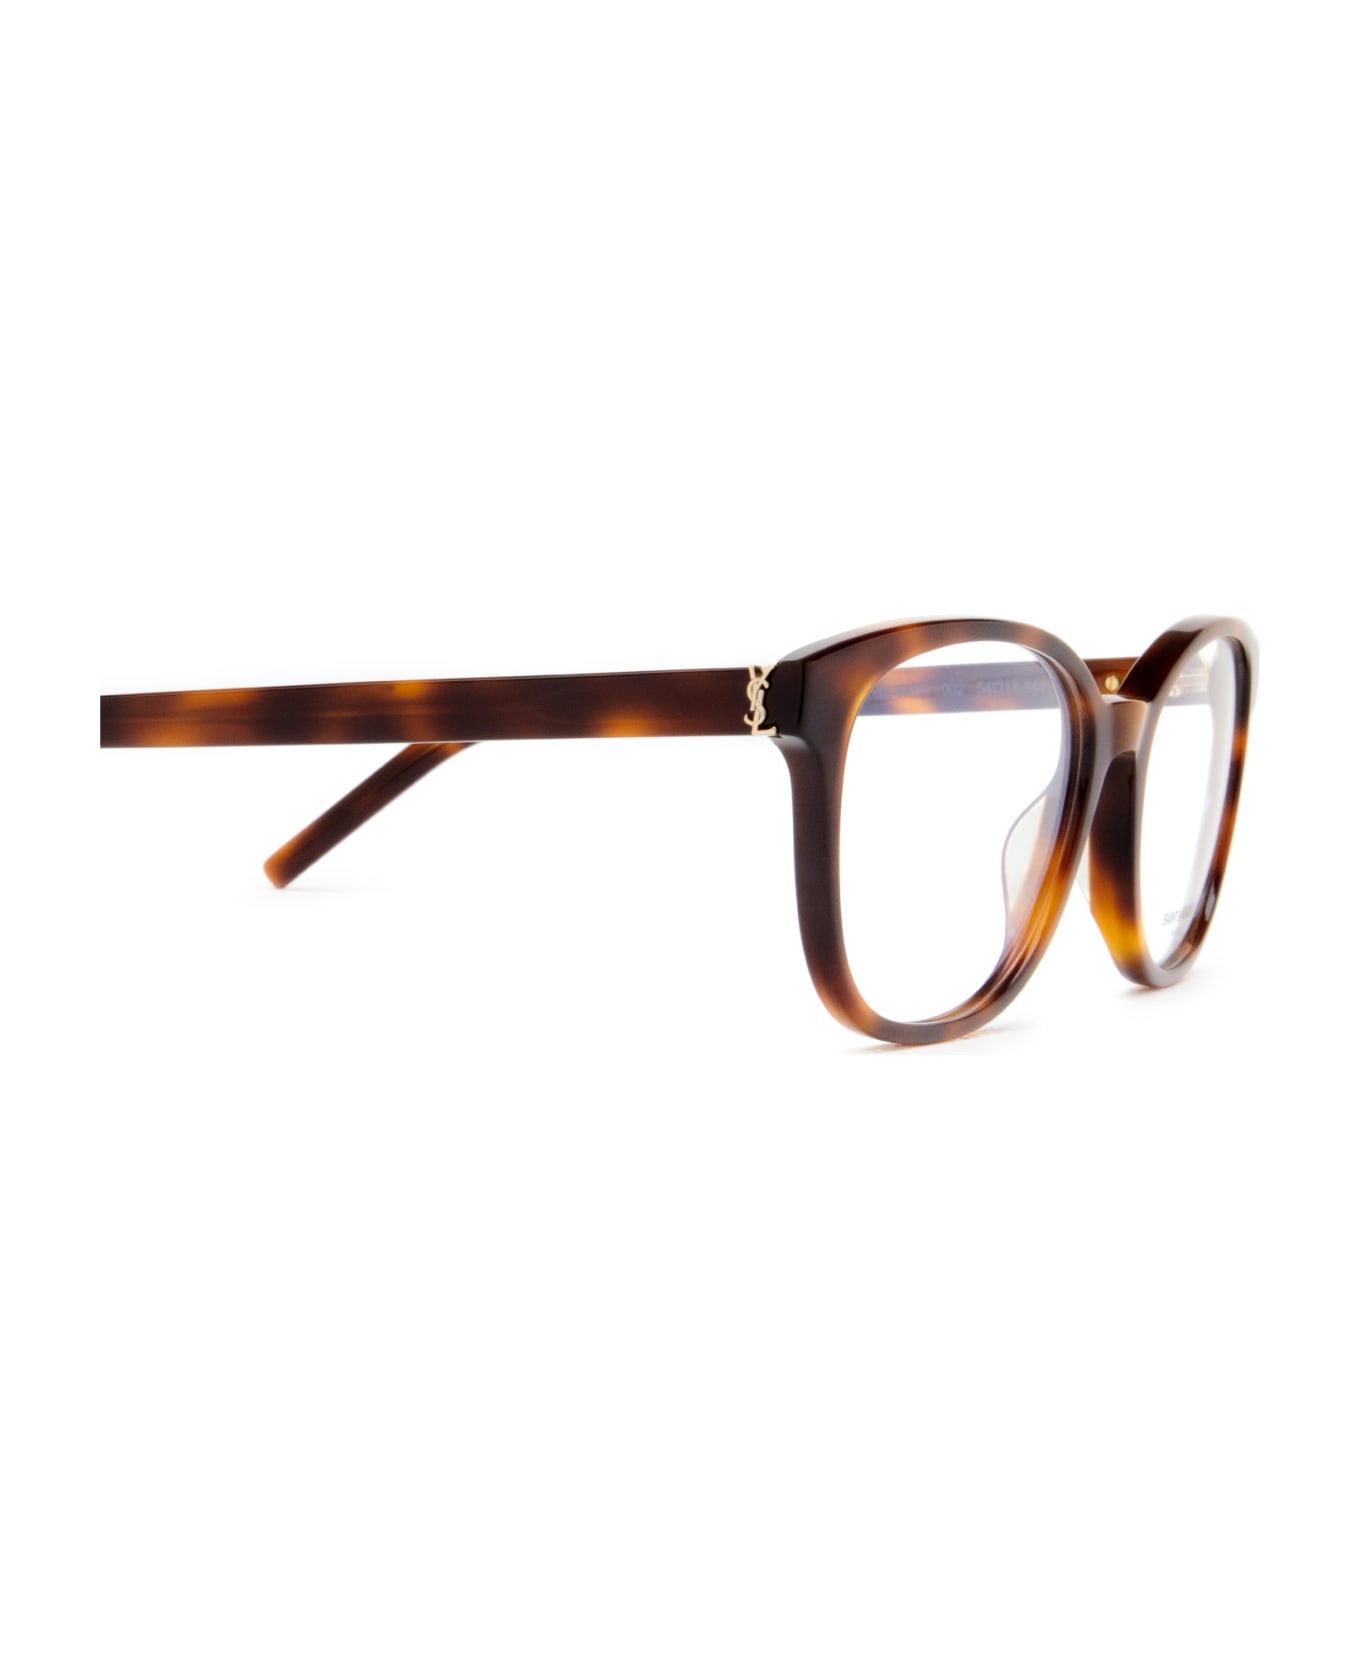 Saint Laurent Eyewear Sl M113 Havana Glasses - Havana